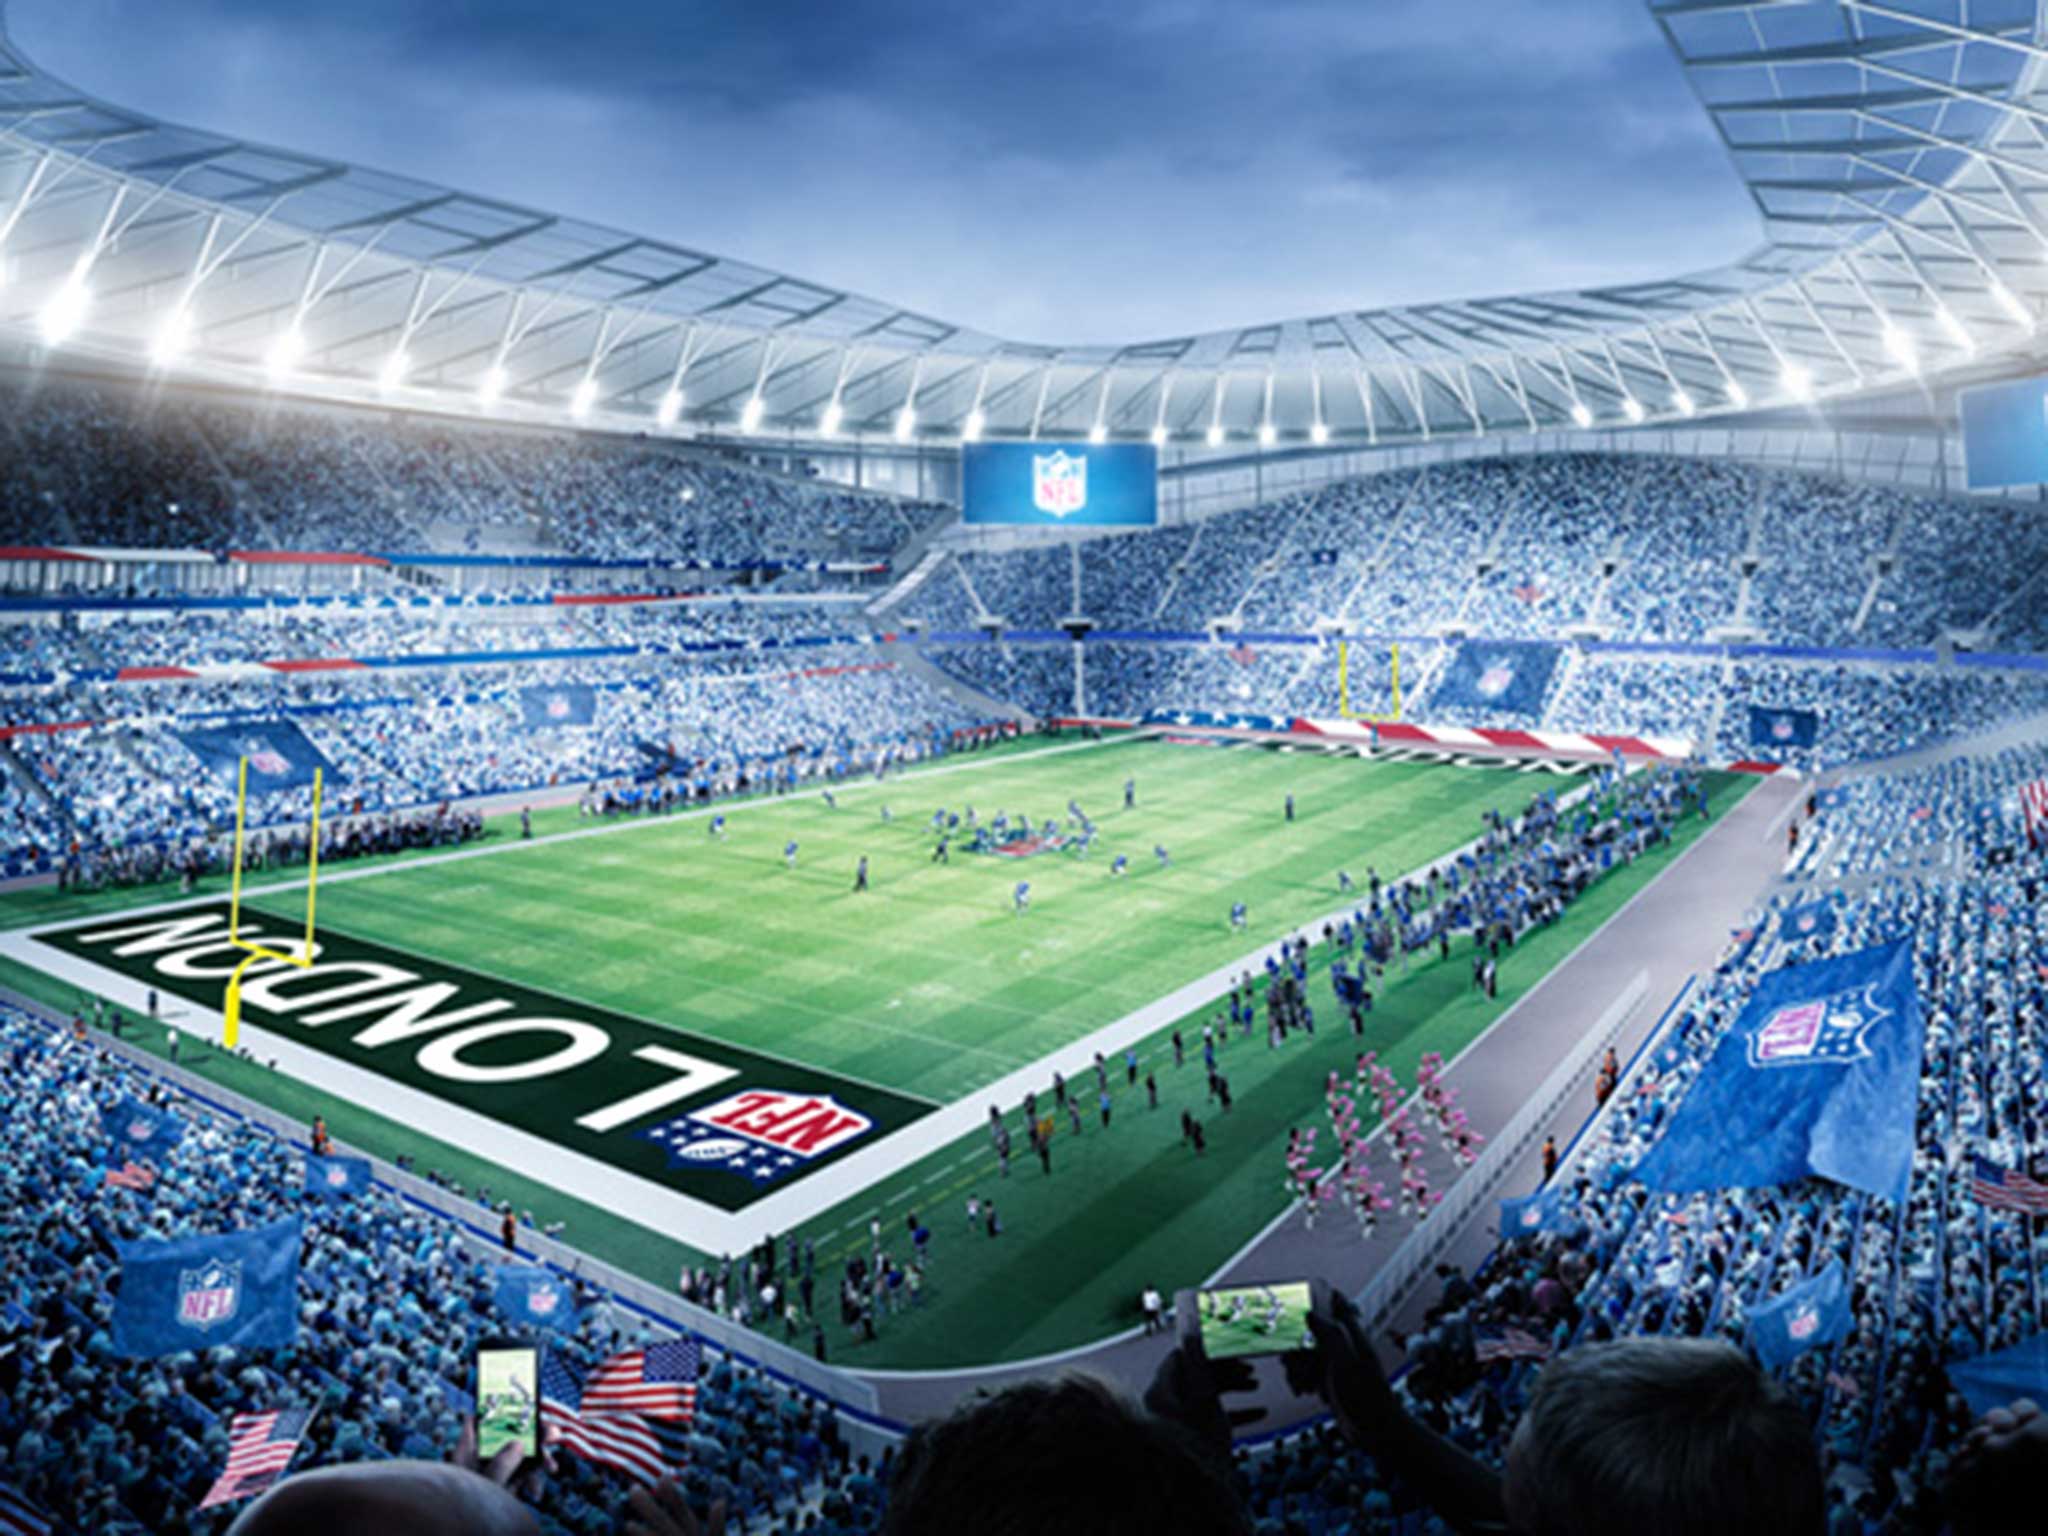 How the new Tottenham stadium will look hosting NFL fixtures